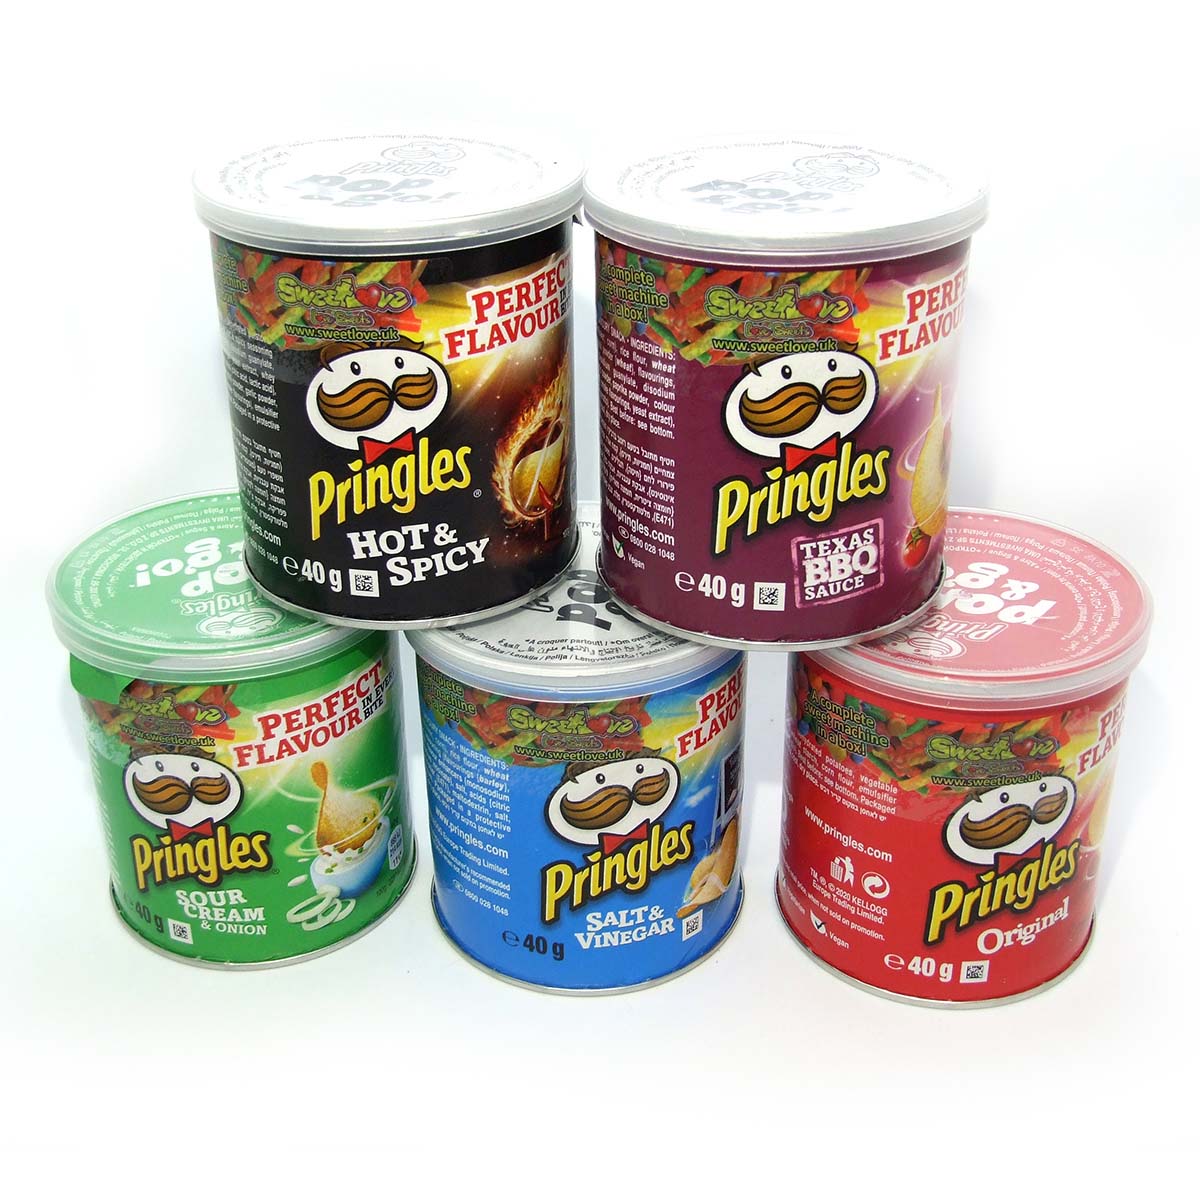 Pringles 40g Unmarked Packs.